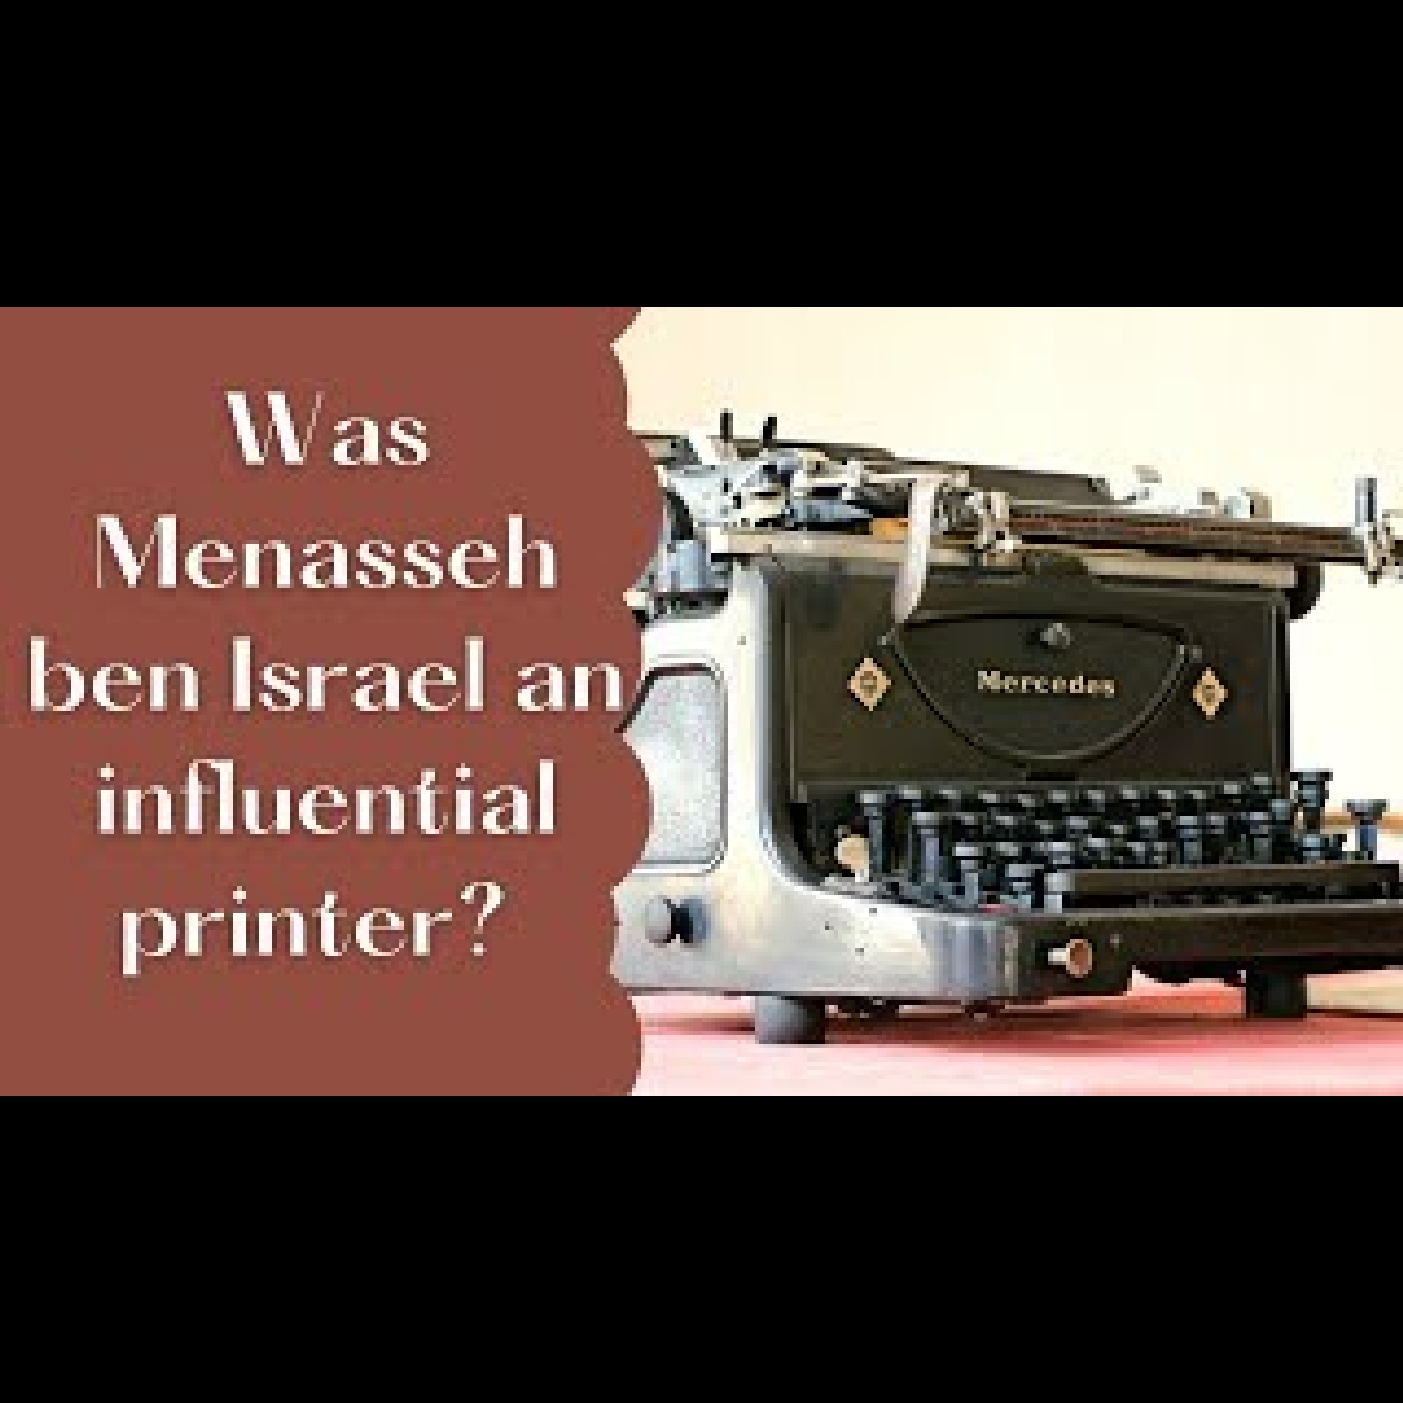 Menasseh ben Israel #3 - Influential Printer?